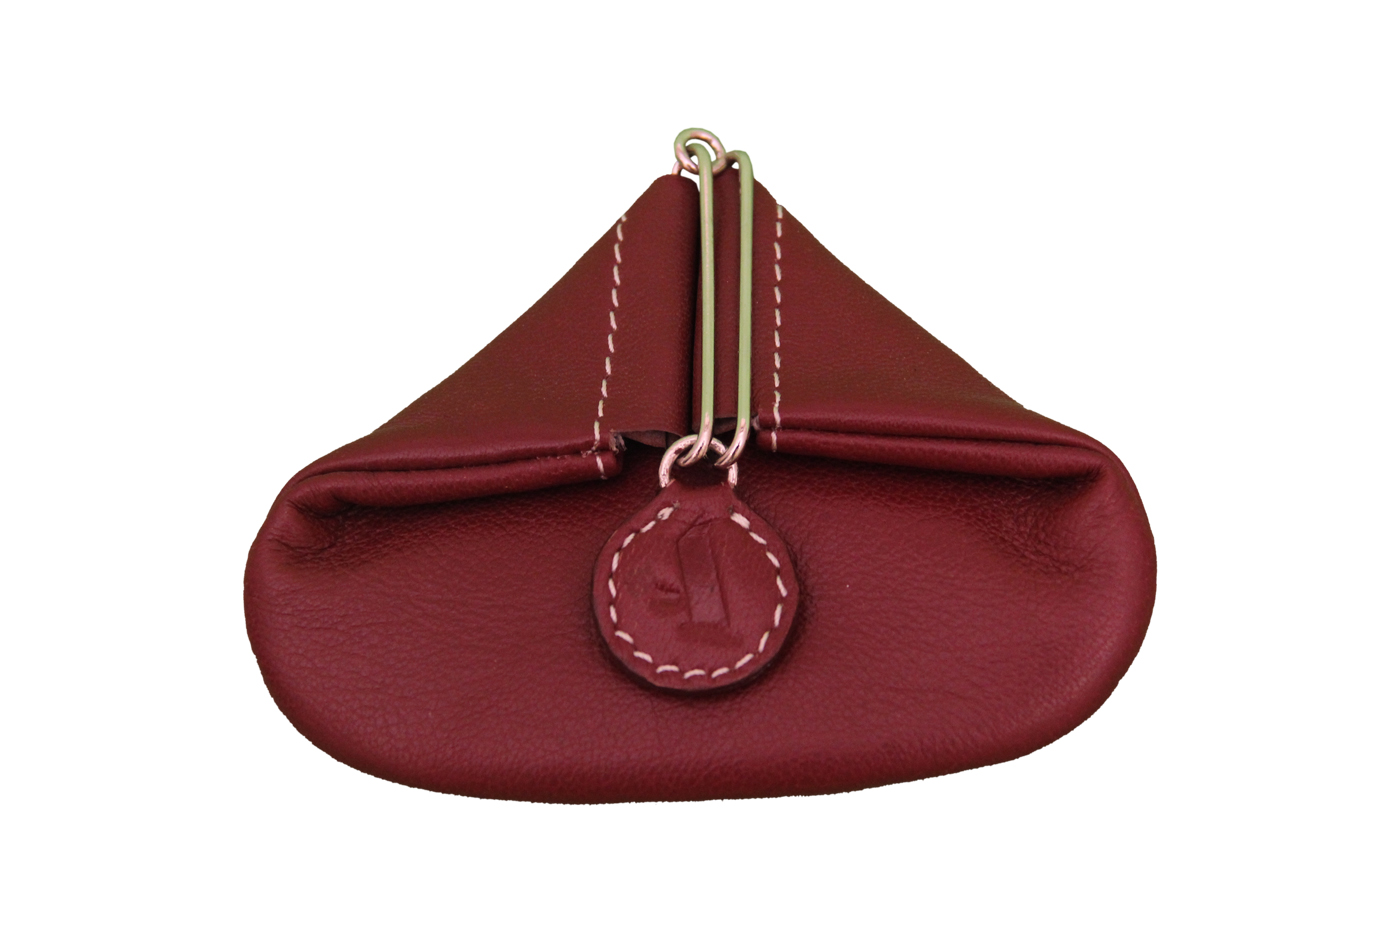 W100--Triangular shape mini coin purse in Genuine Leather - Wine